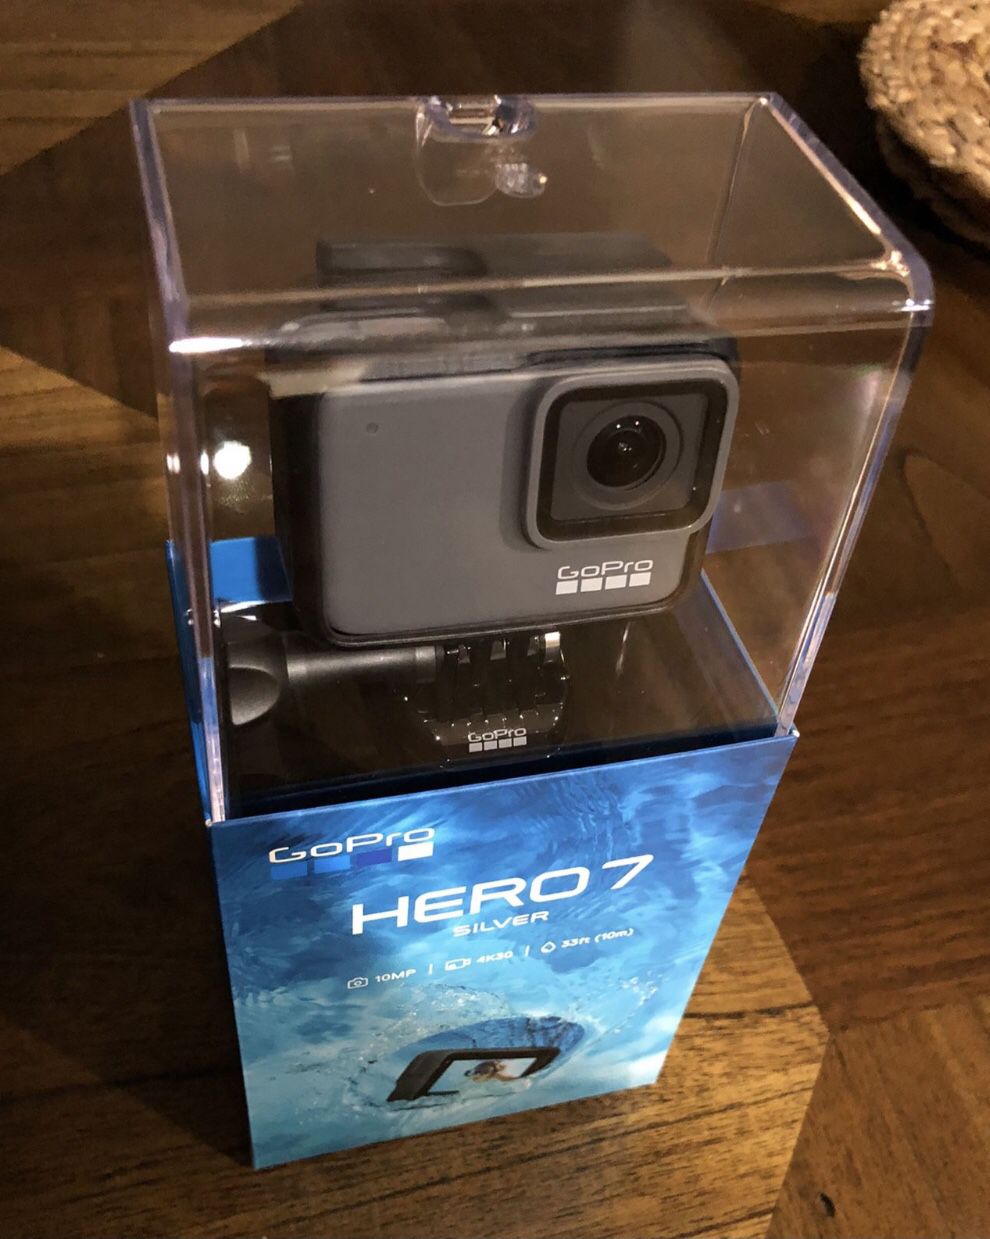 GoPro Hero7 Silver - Brand new, unopened